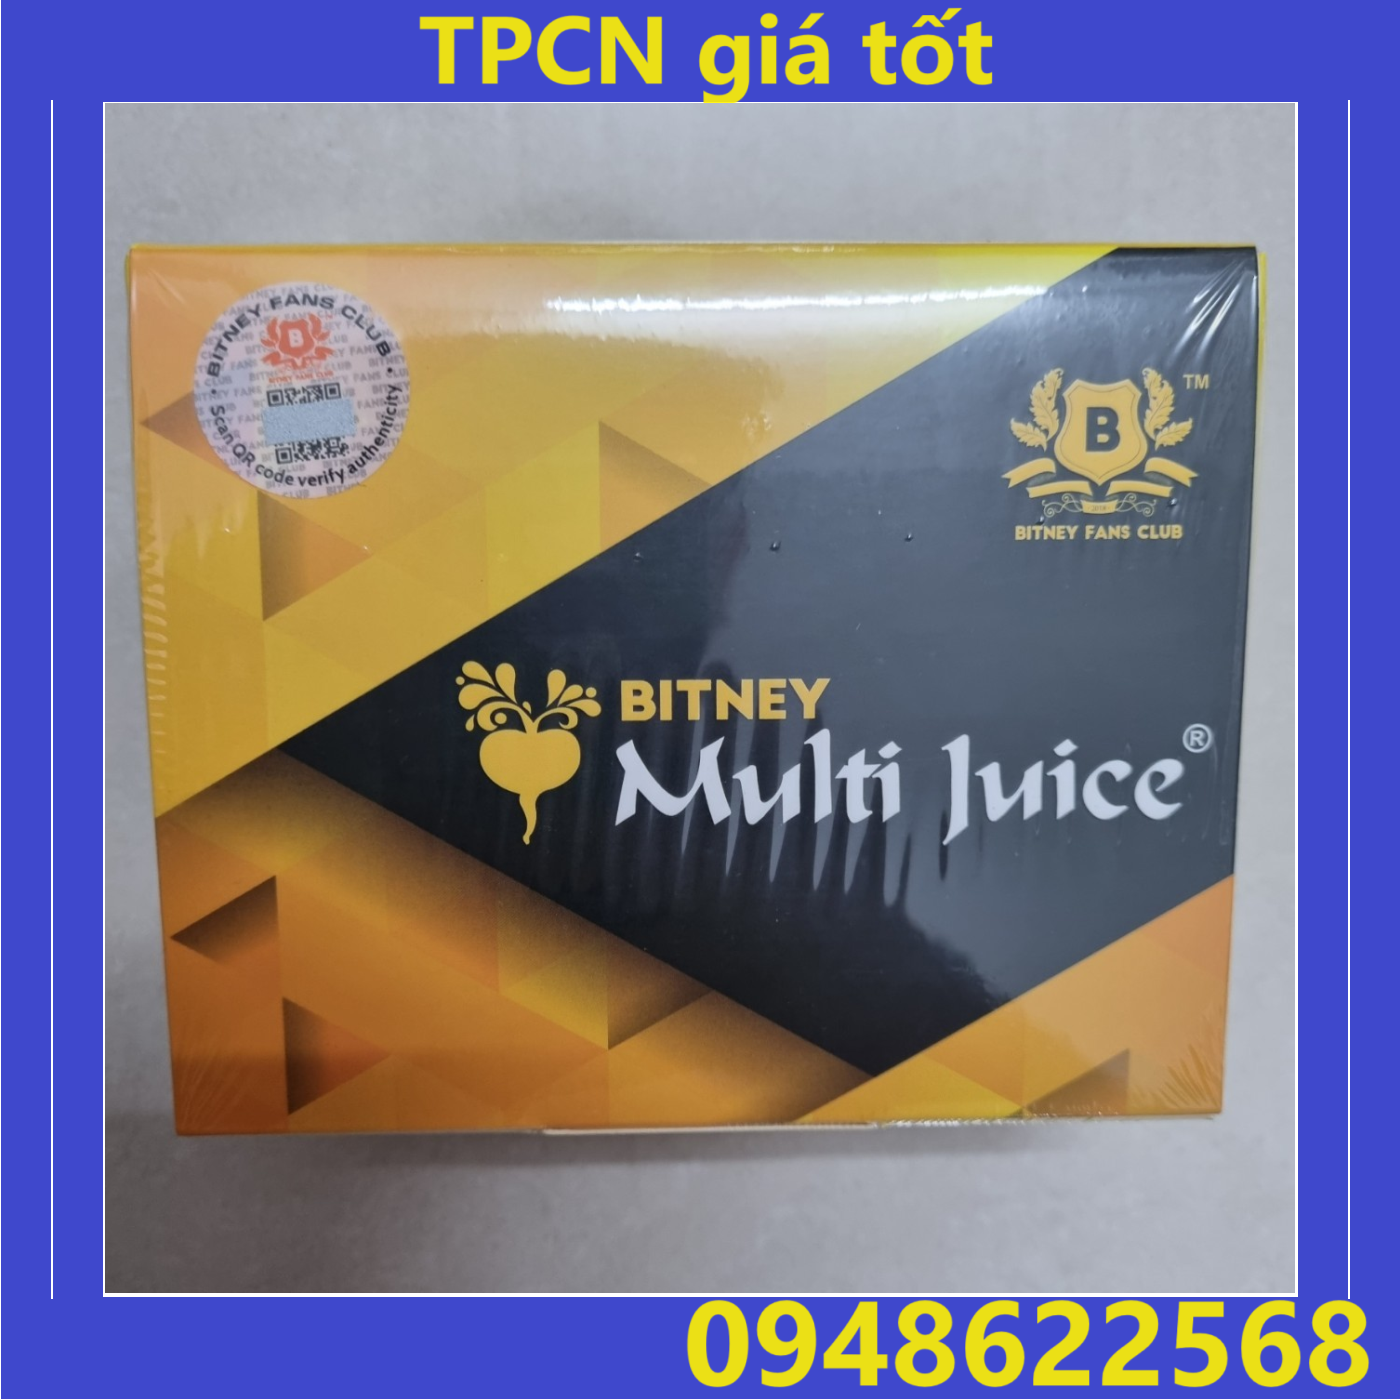 Multi Juice Bitney - Nhập khẩu Malaysia 1 hộp = 10 gói